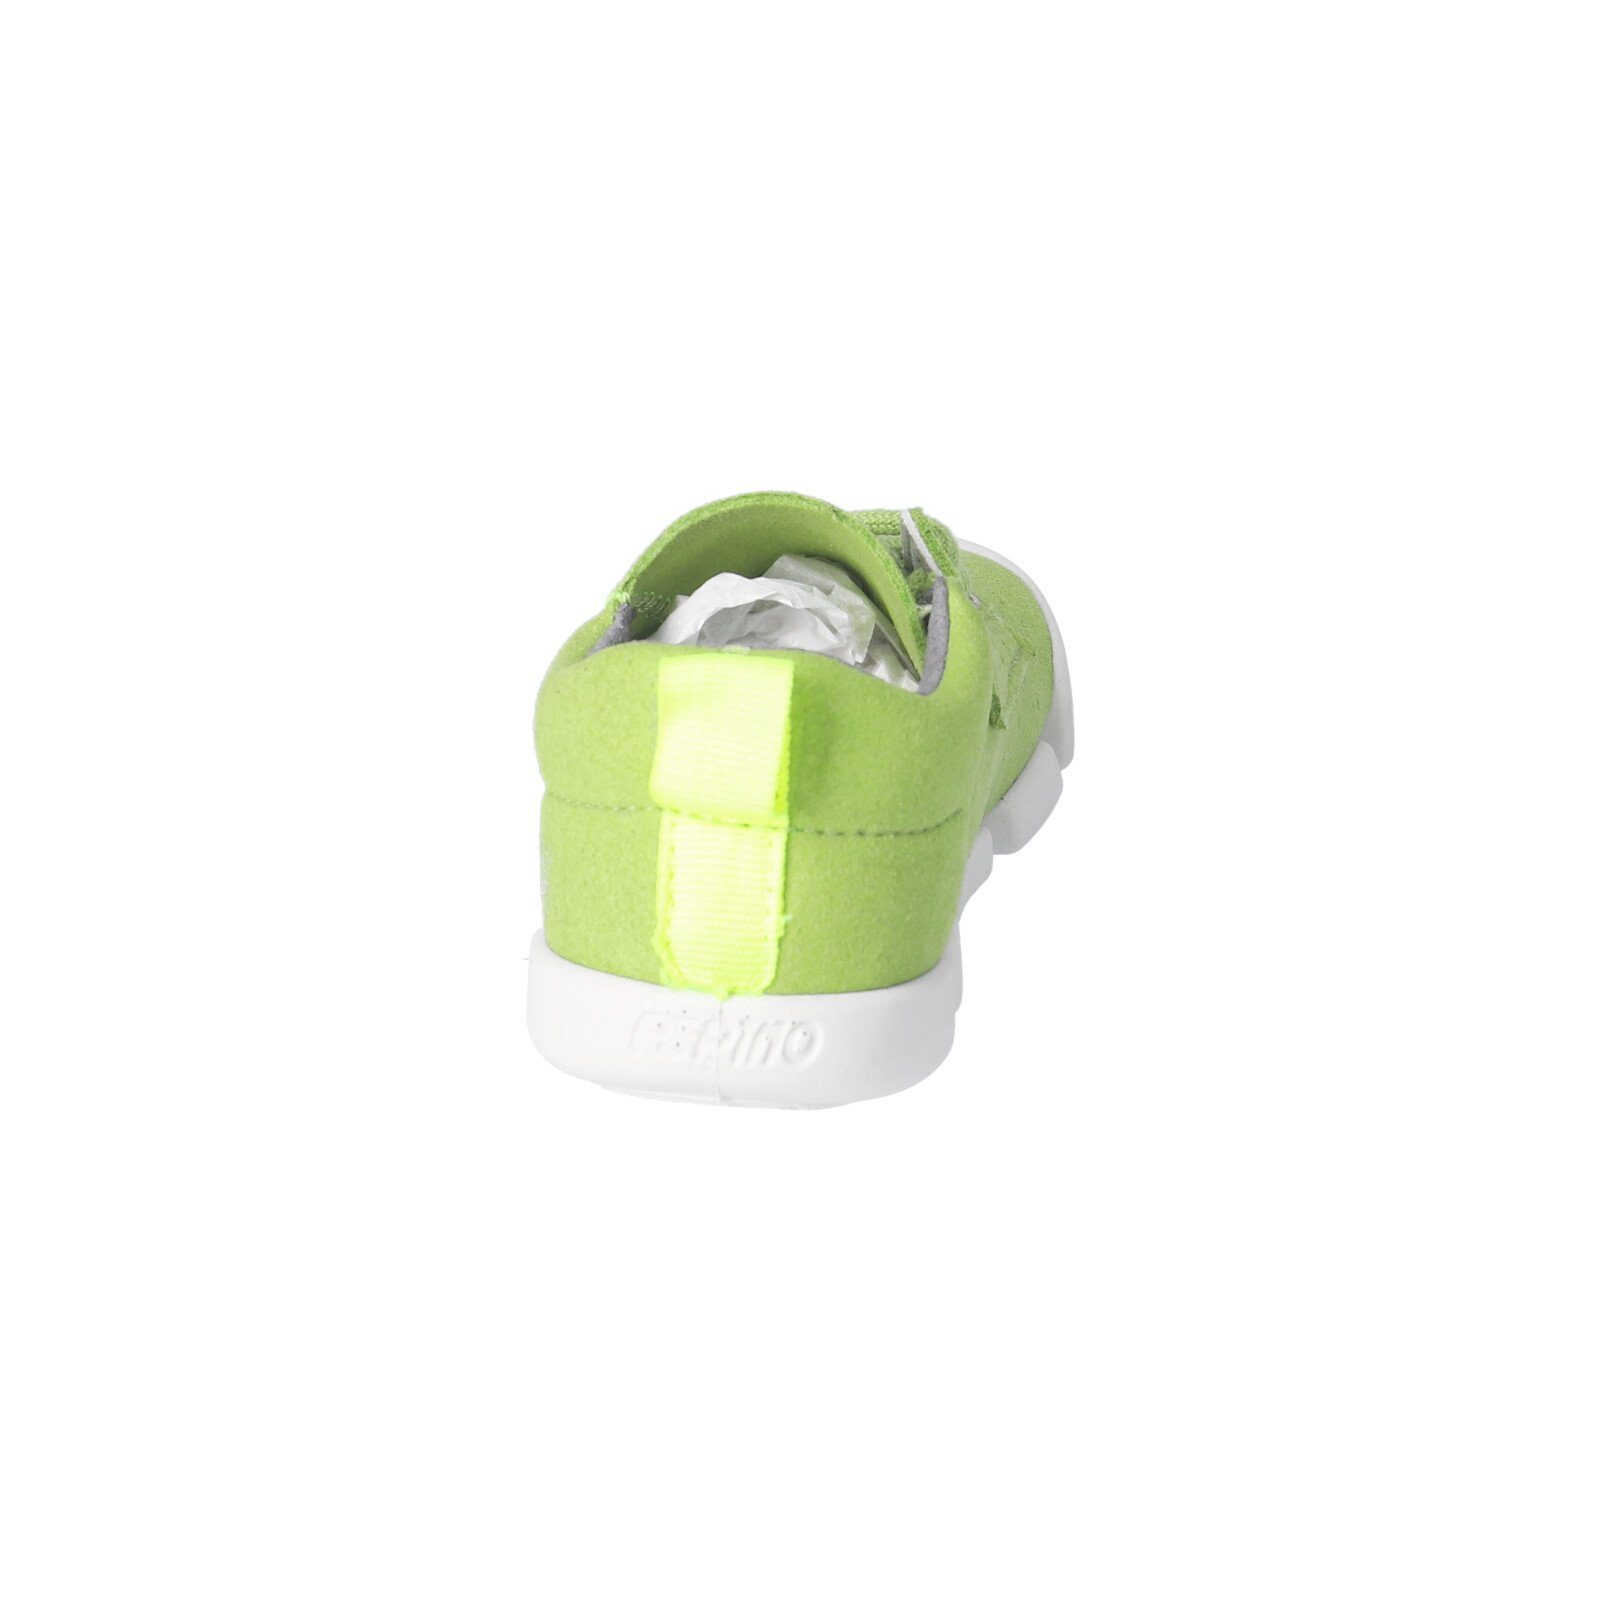 Ricosta Sneaker lime/neongelb (780)